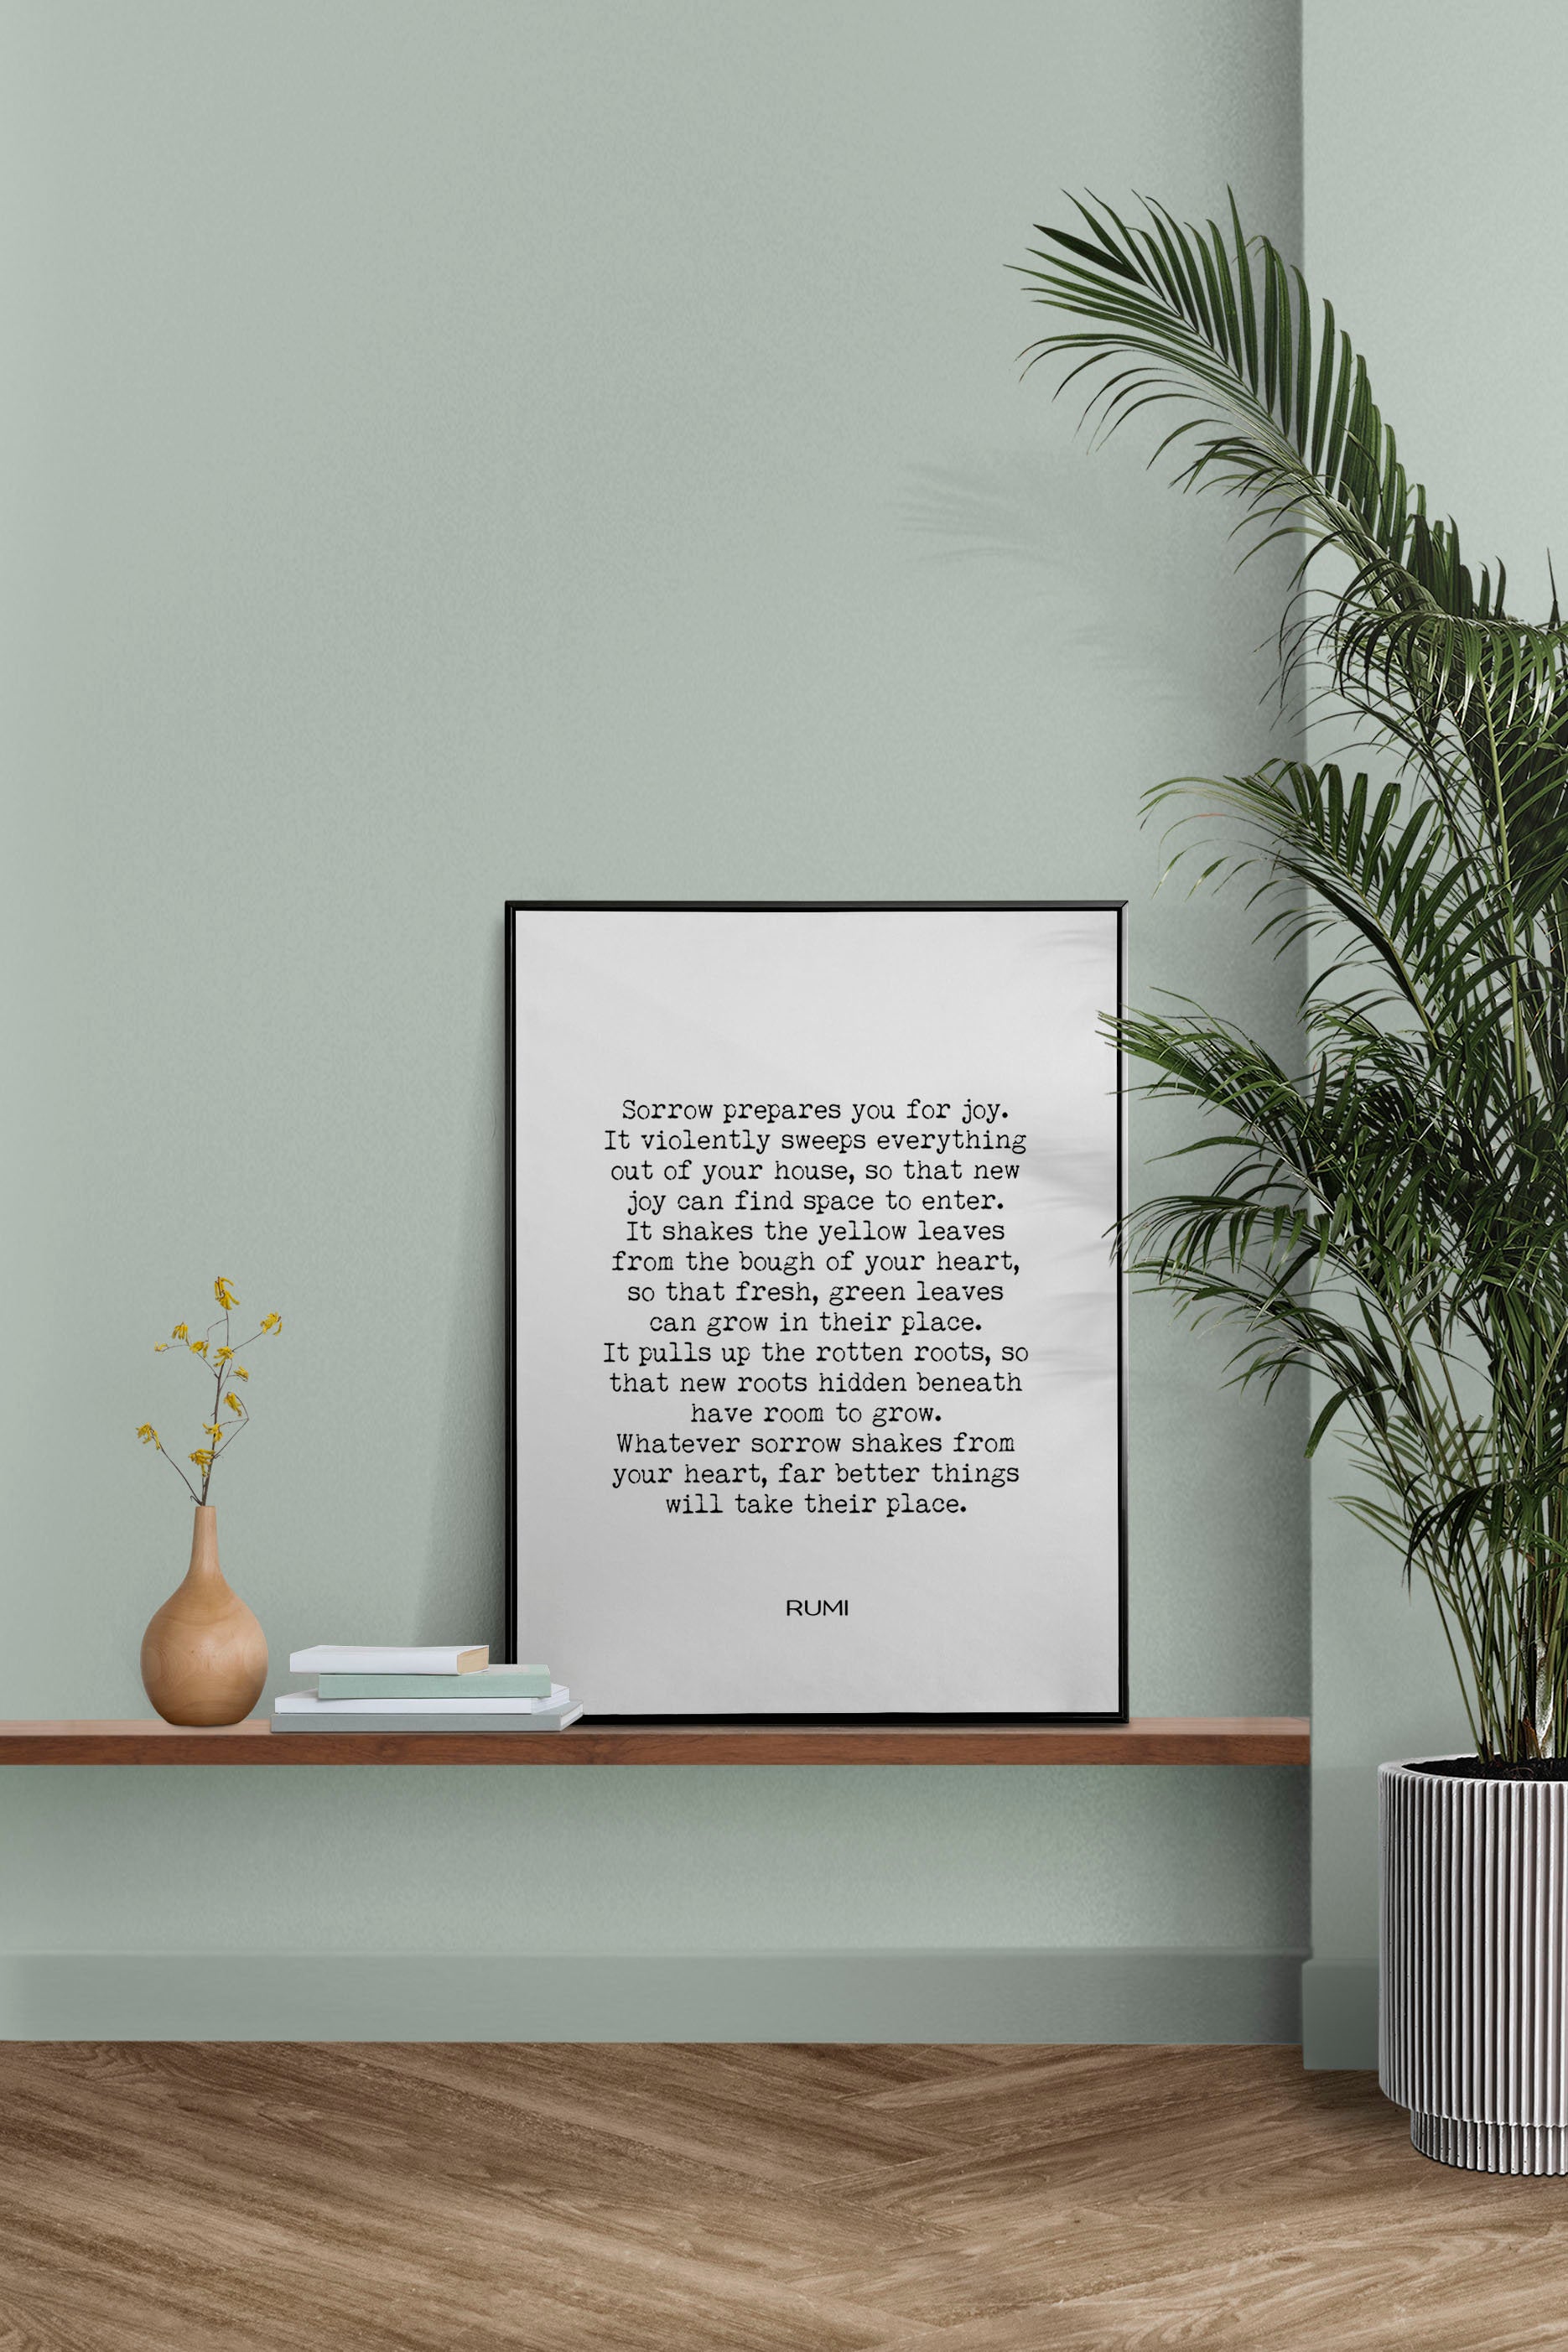 Rumi - Sorrow Prepares You For Joy Poem Wall Art Prints, Black & White Wall Decor, Inspirational Poetry Unframed and Framed Art